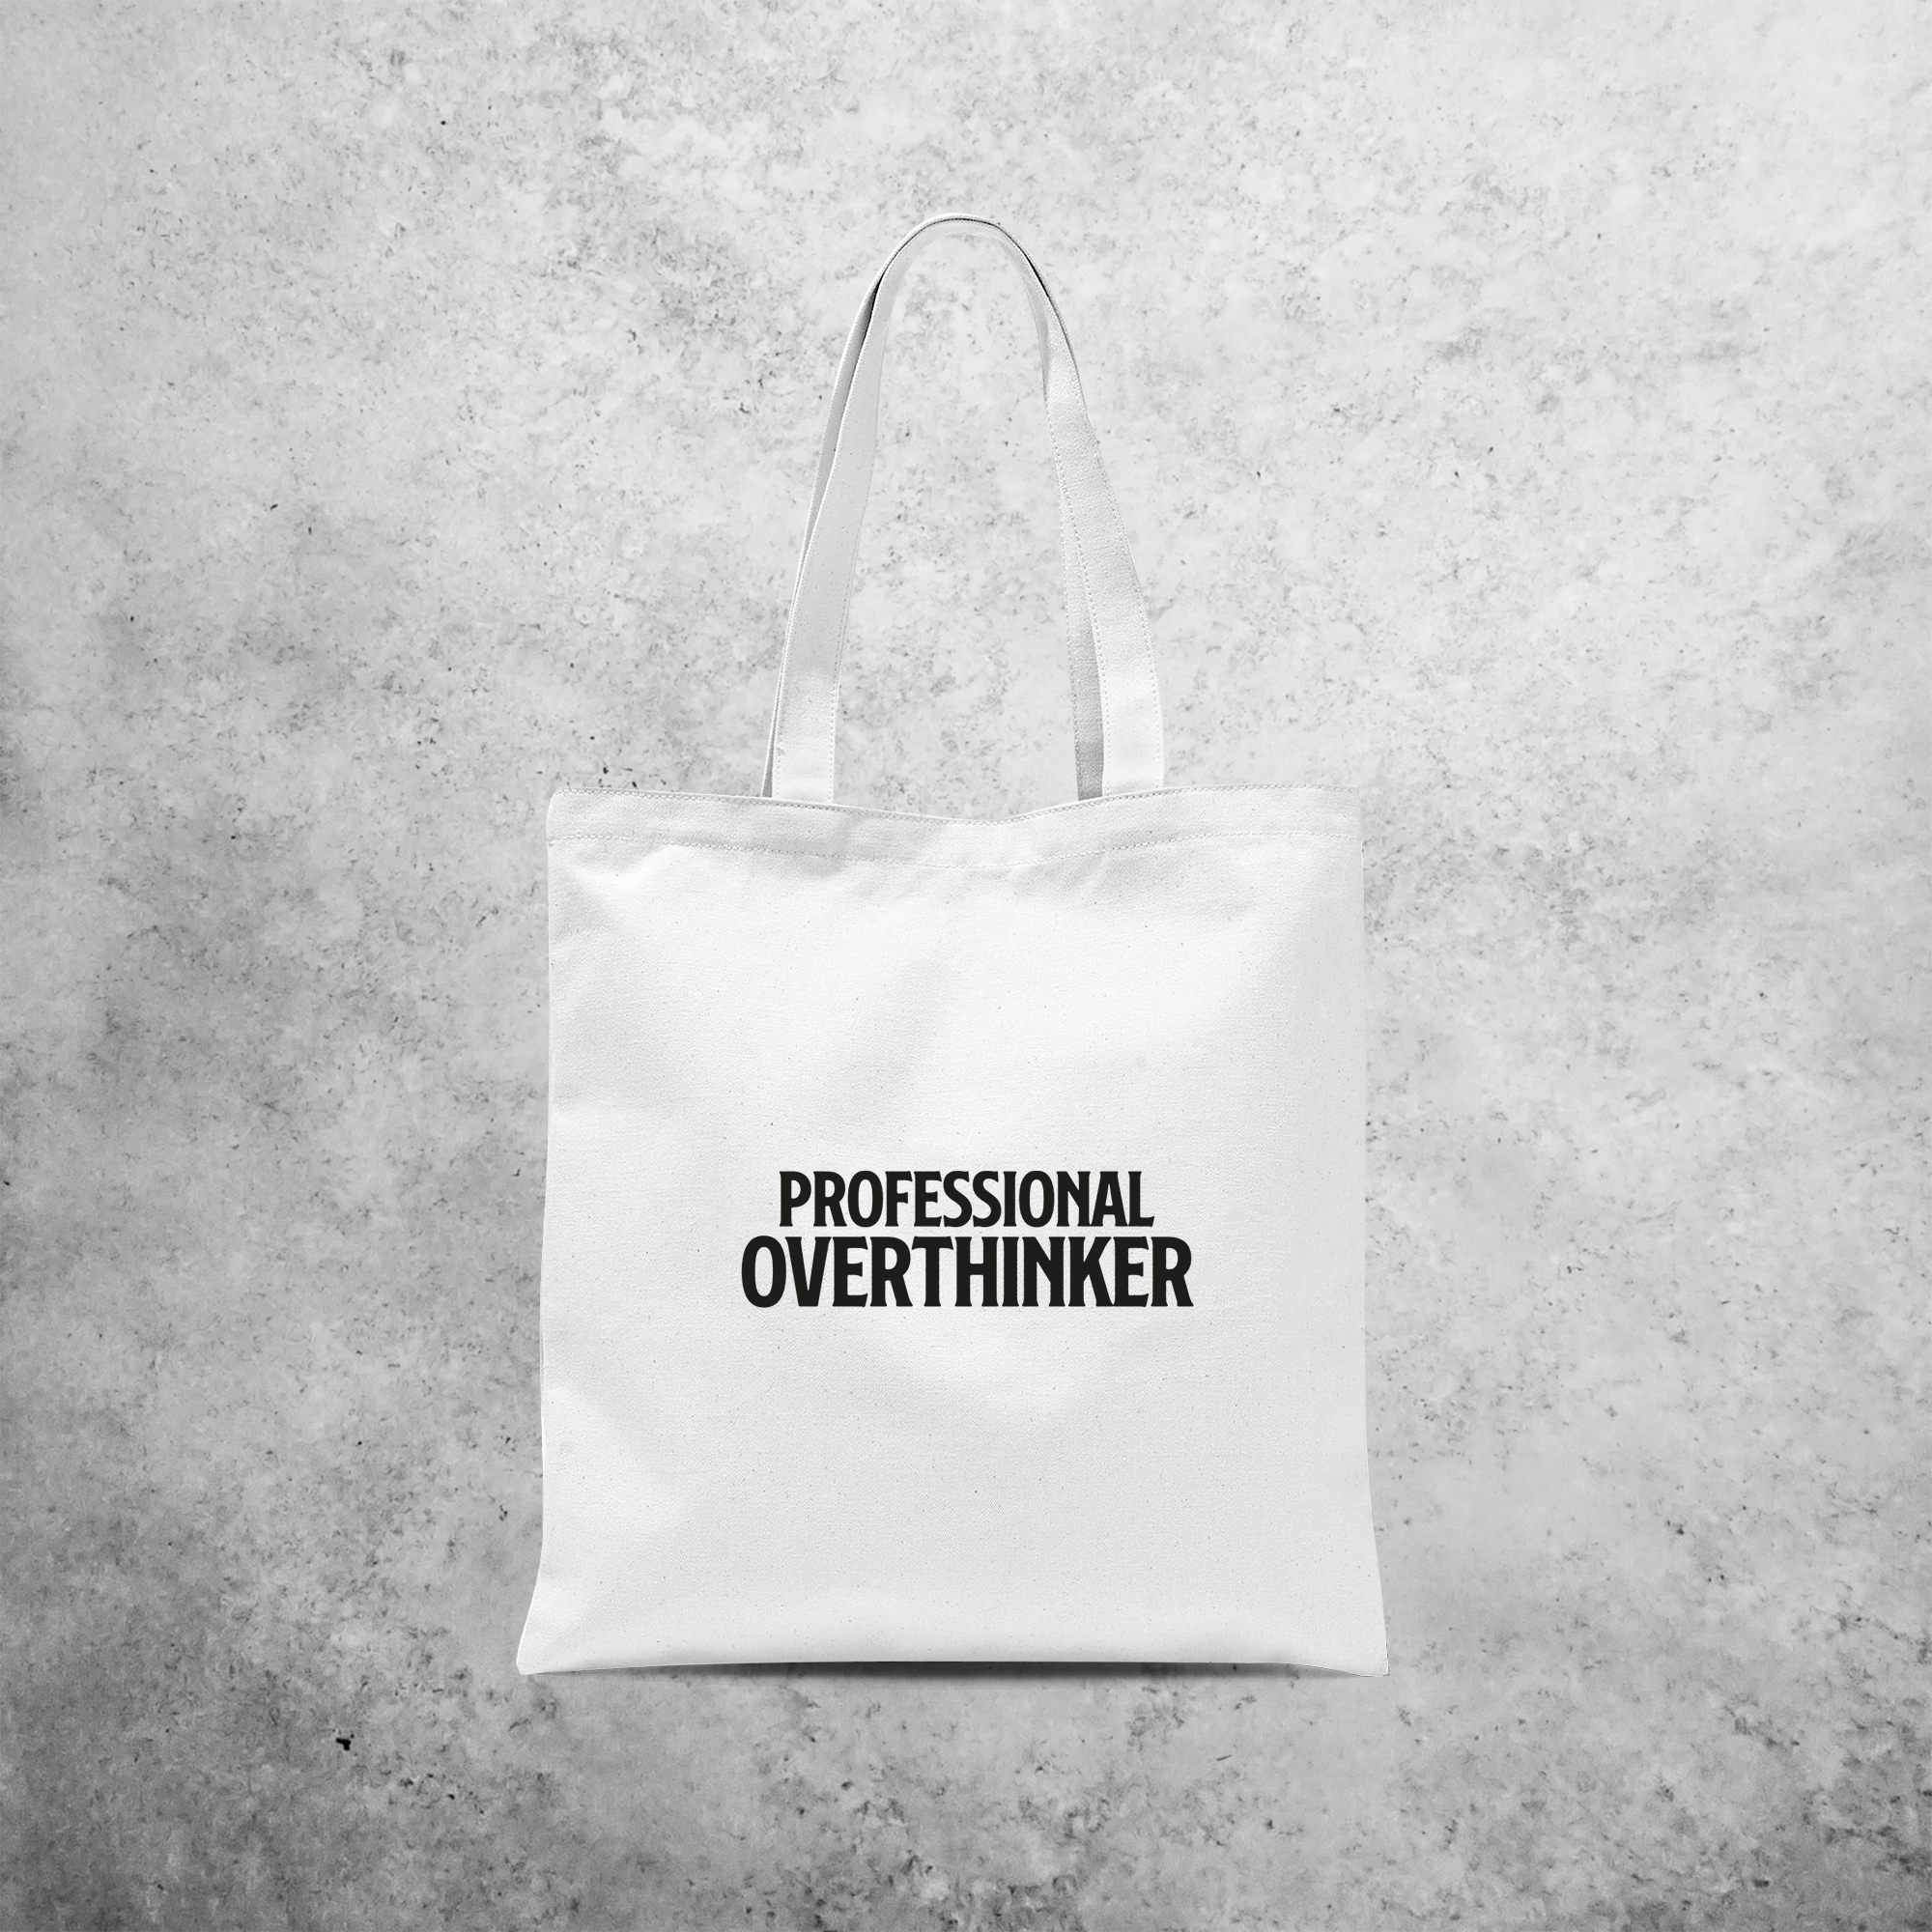 'Professional overthinker' tote bag